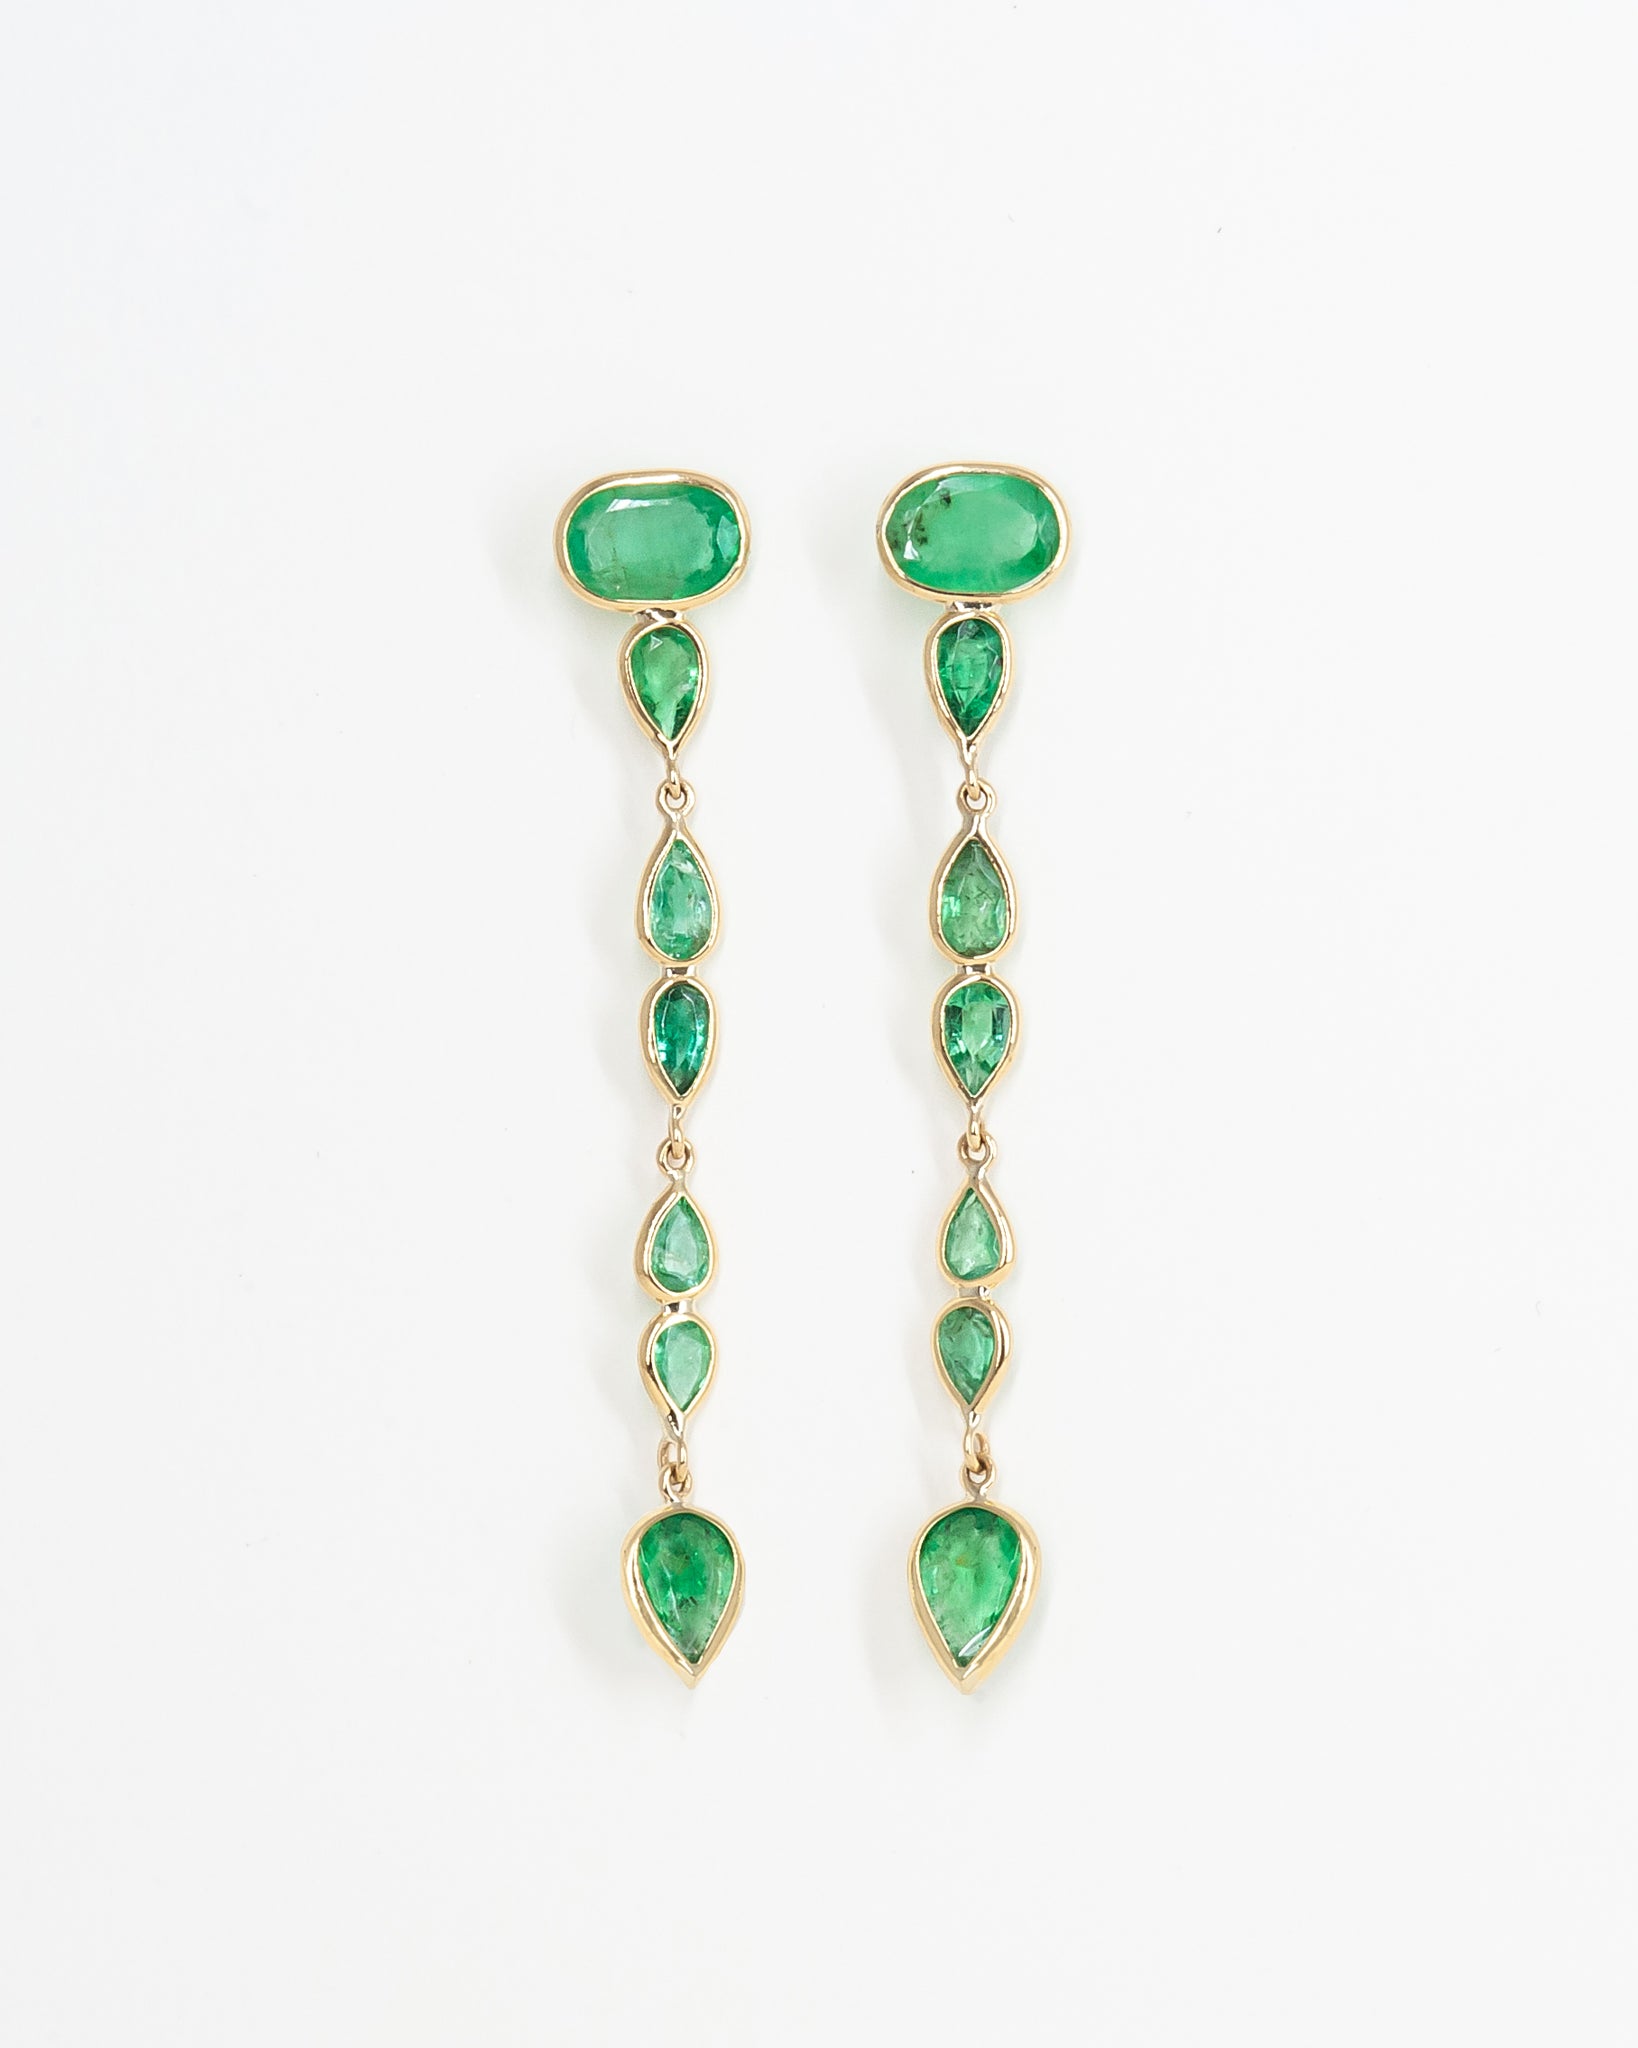 Lydia's renovated emeralds